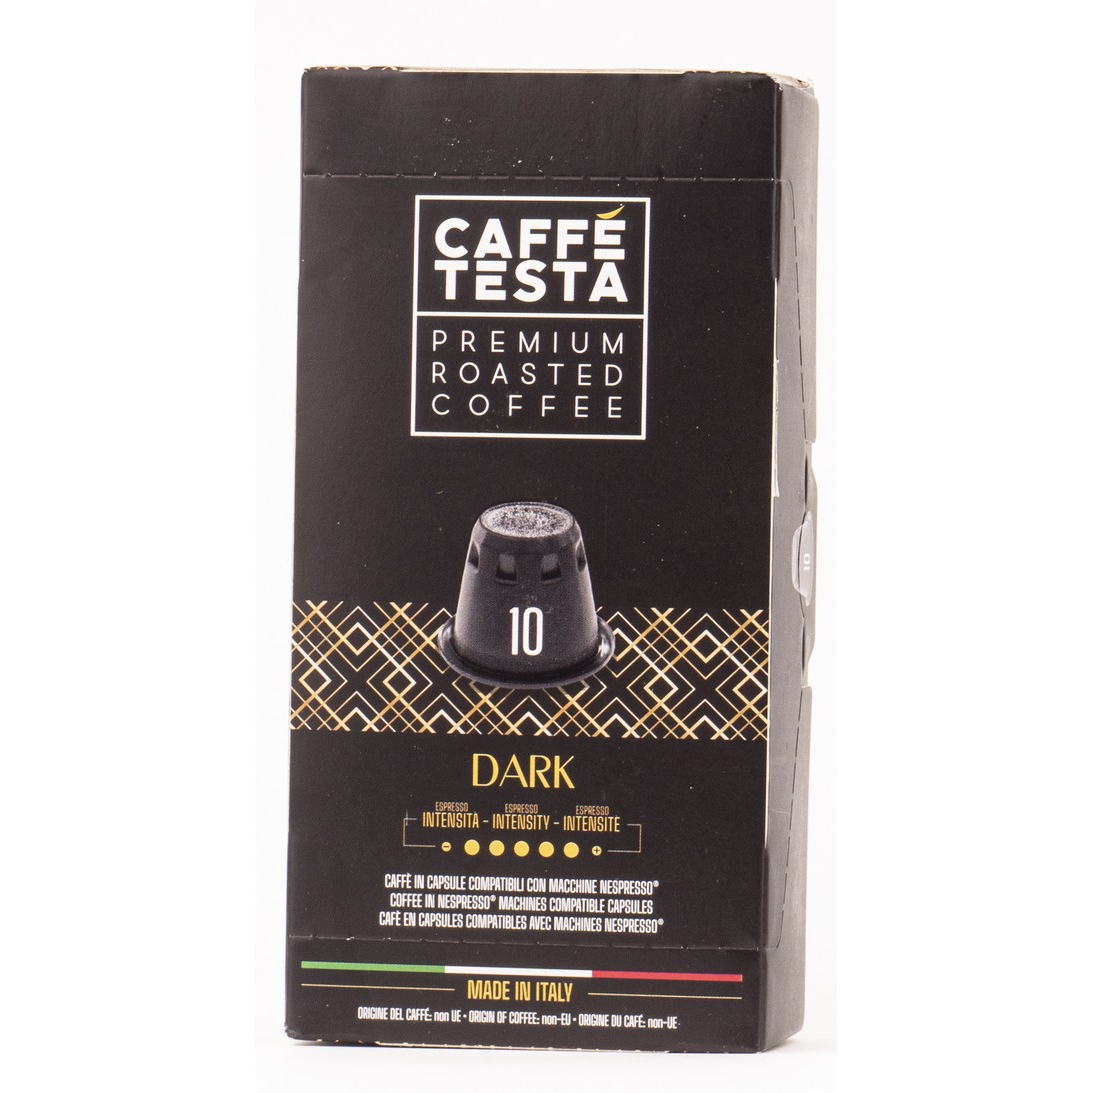 Кофе Caffe Testa Dark в капсулах 20/80, 55 г кофе в капсулах caffe vergnano espresso intenso 10 шт х 5 г